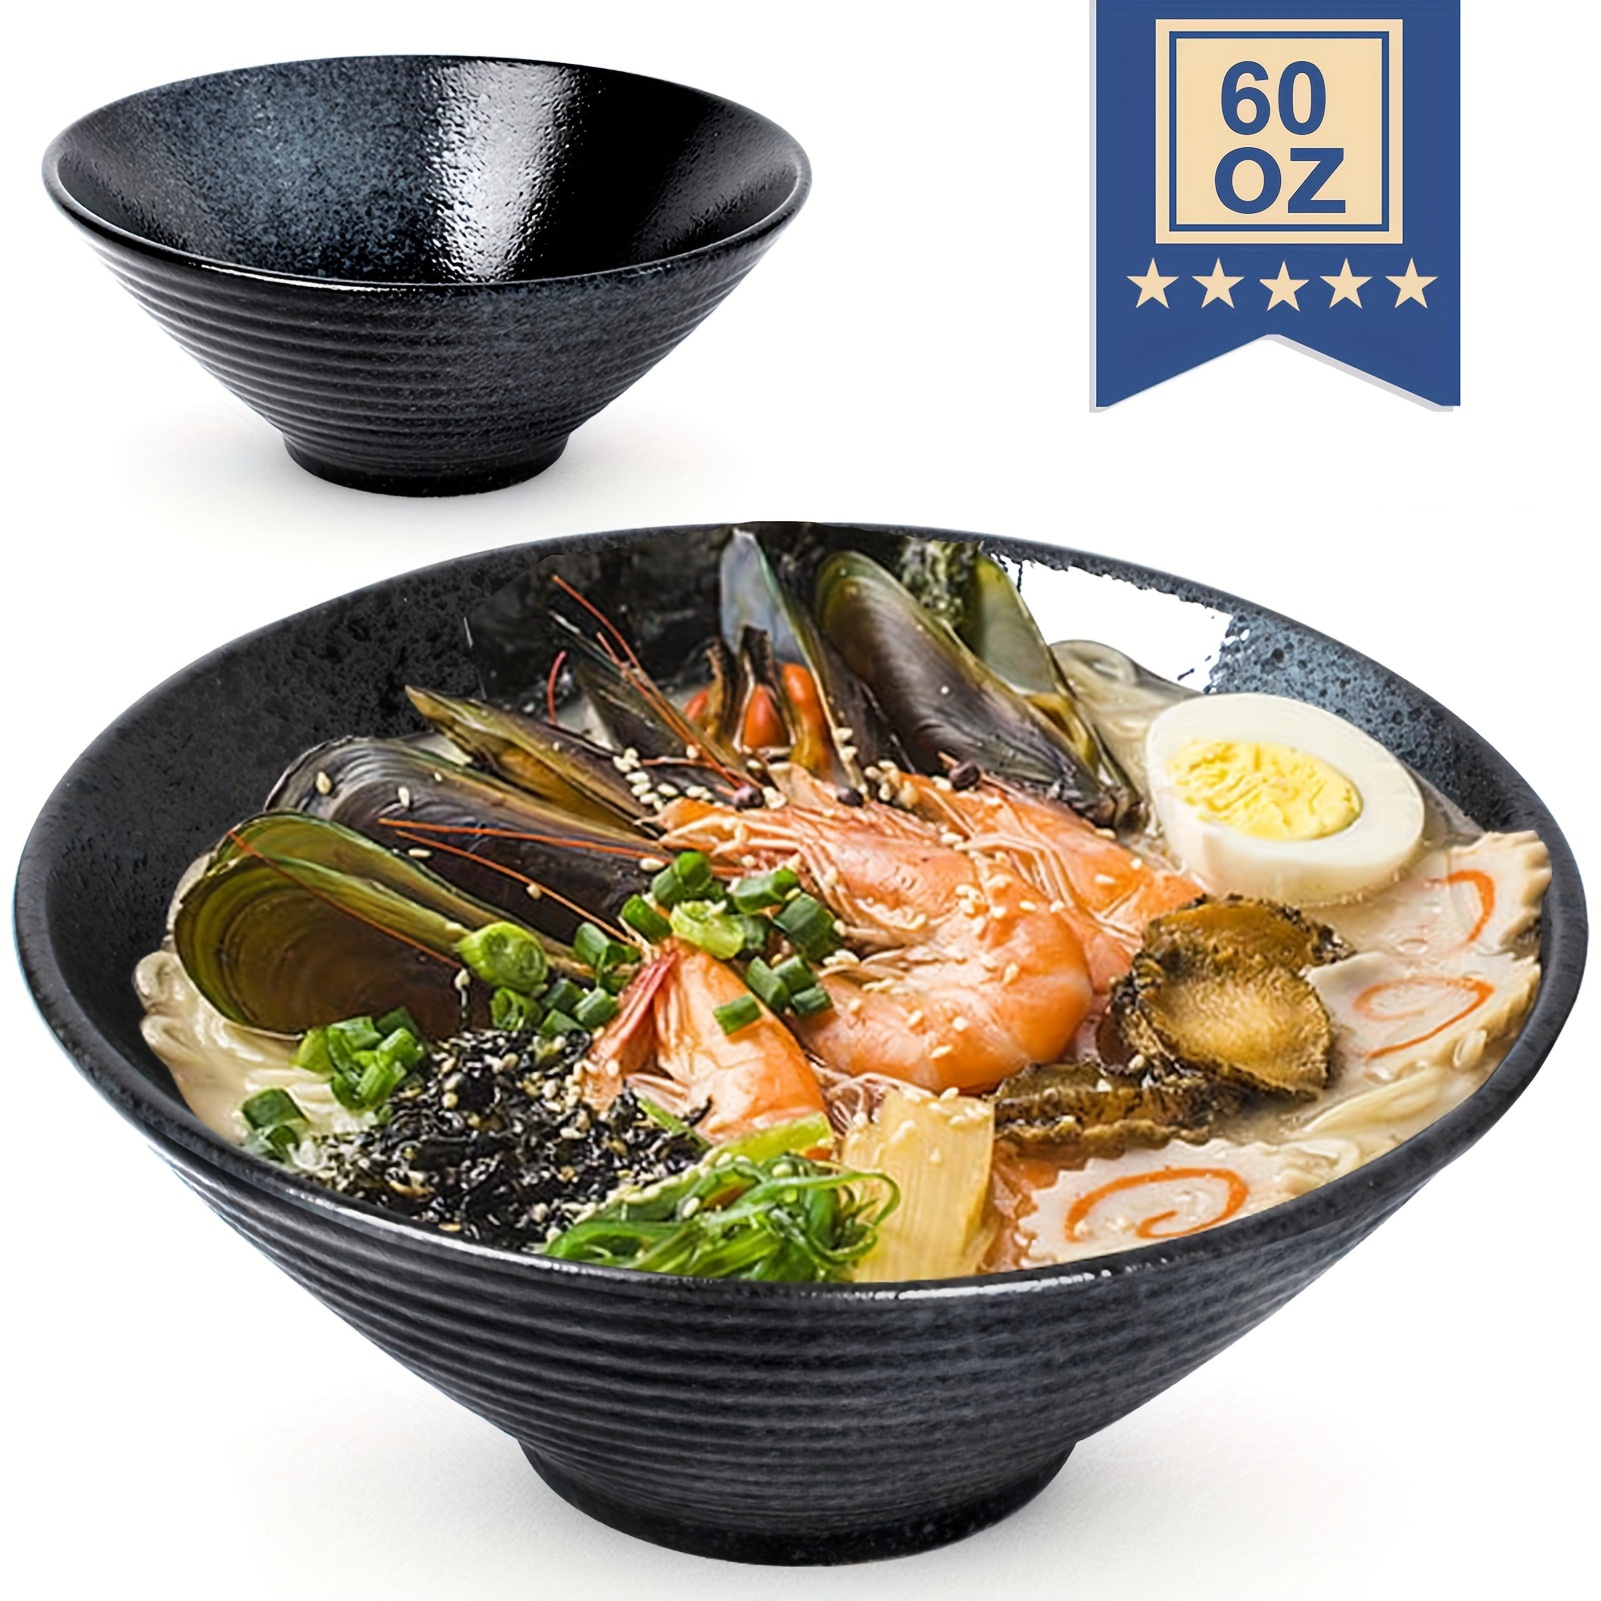 Tenmoku Shironagashi 54.1 oz Multi-Purpose Ramen Noodle Bowls with